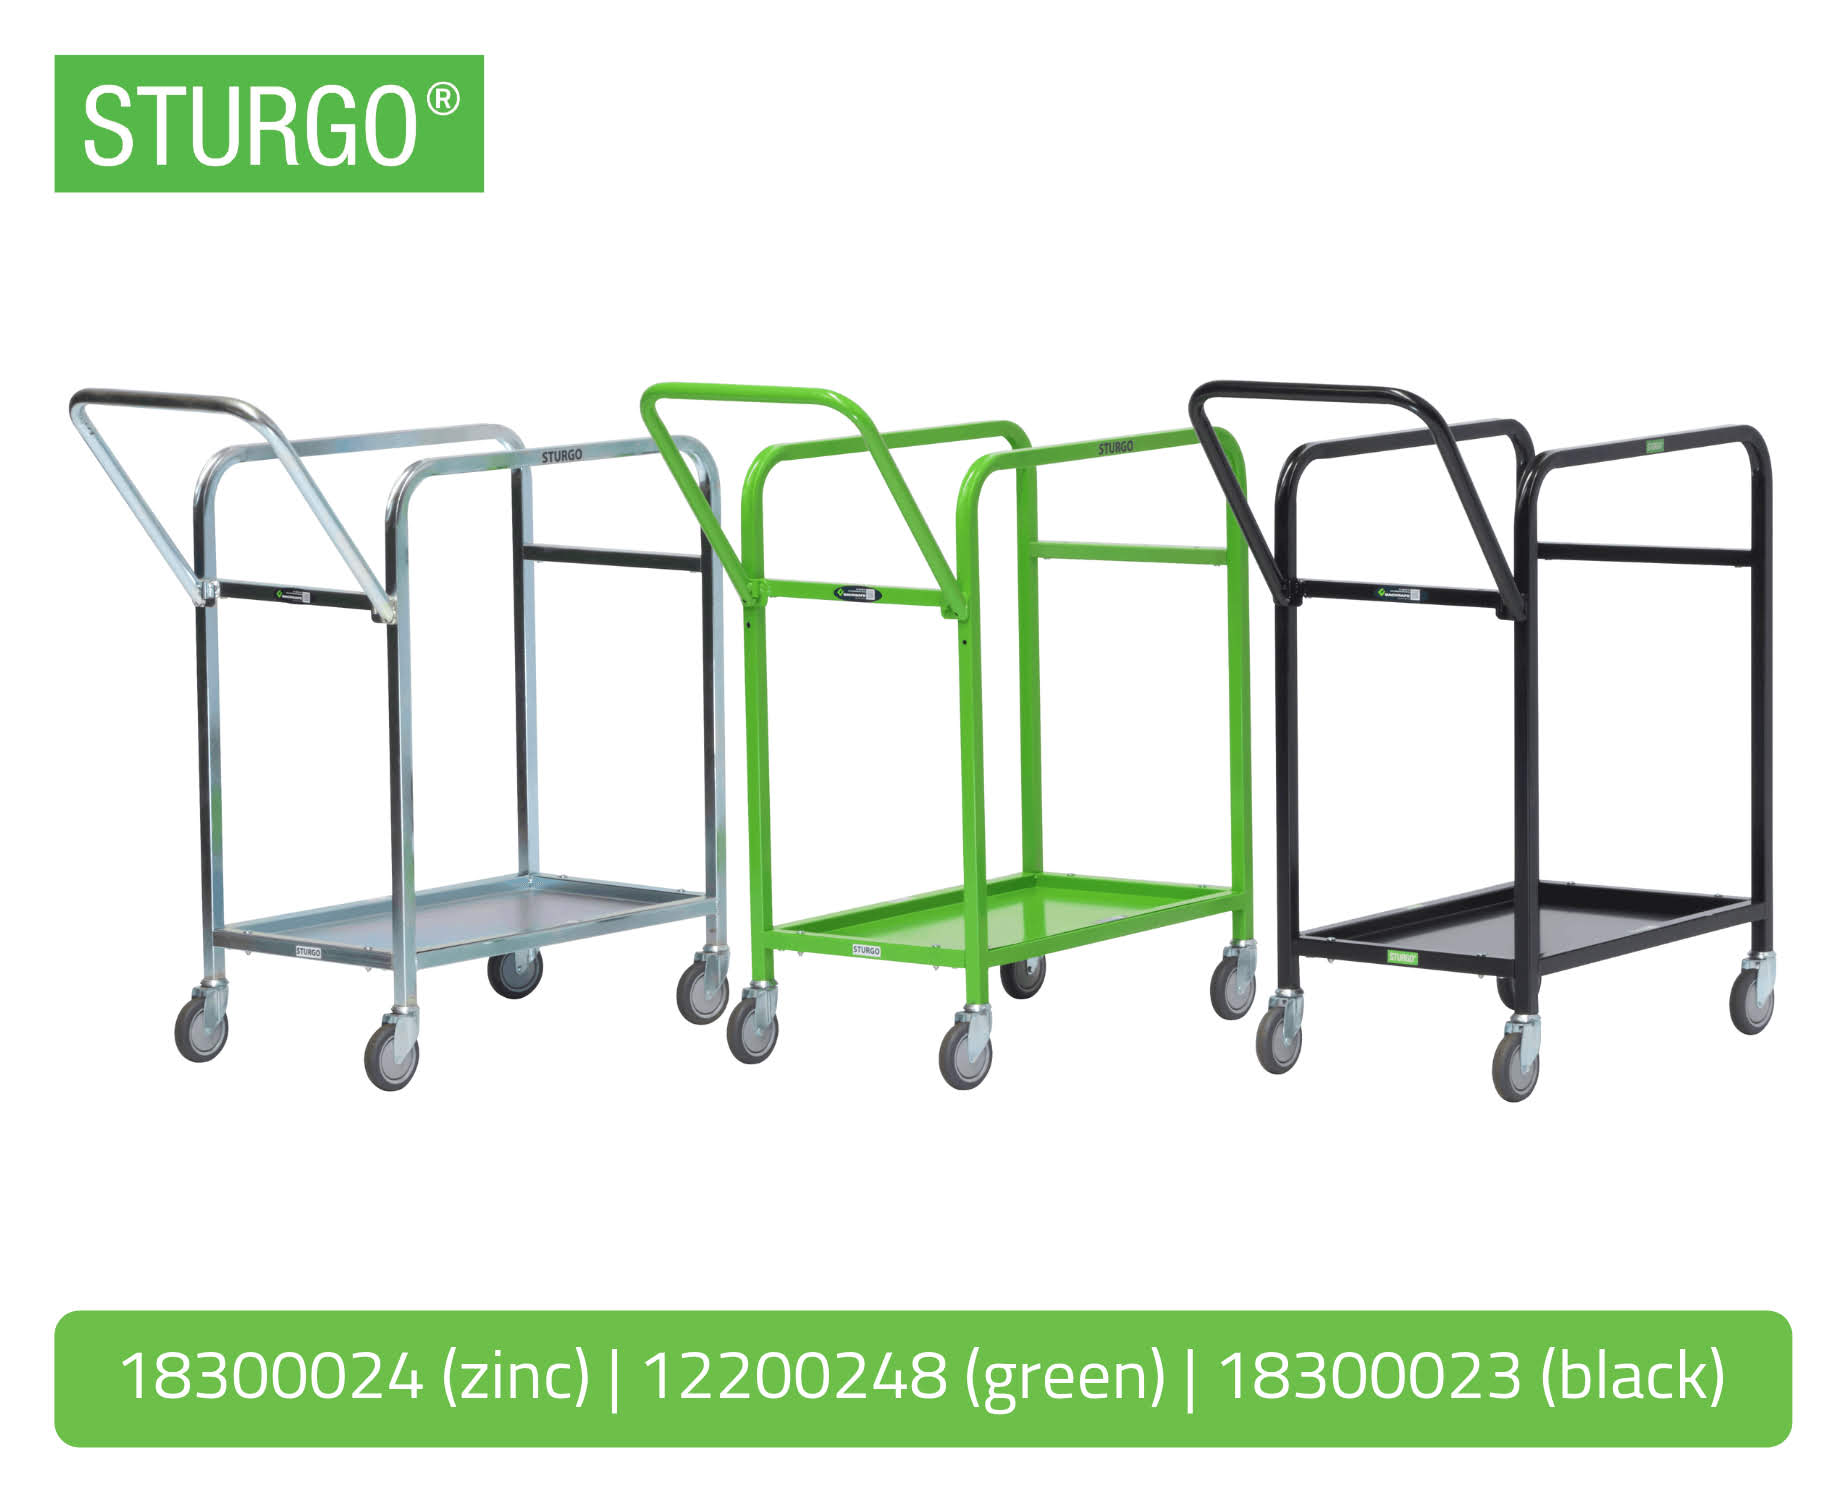 STURGO® Order Picking Trolley